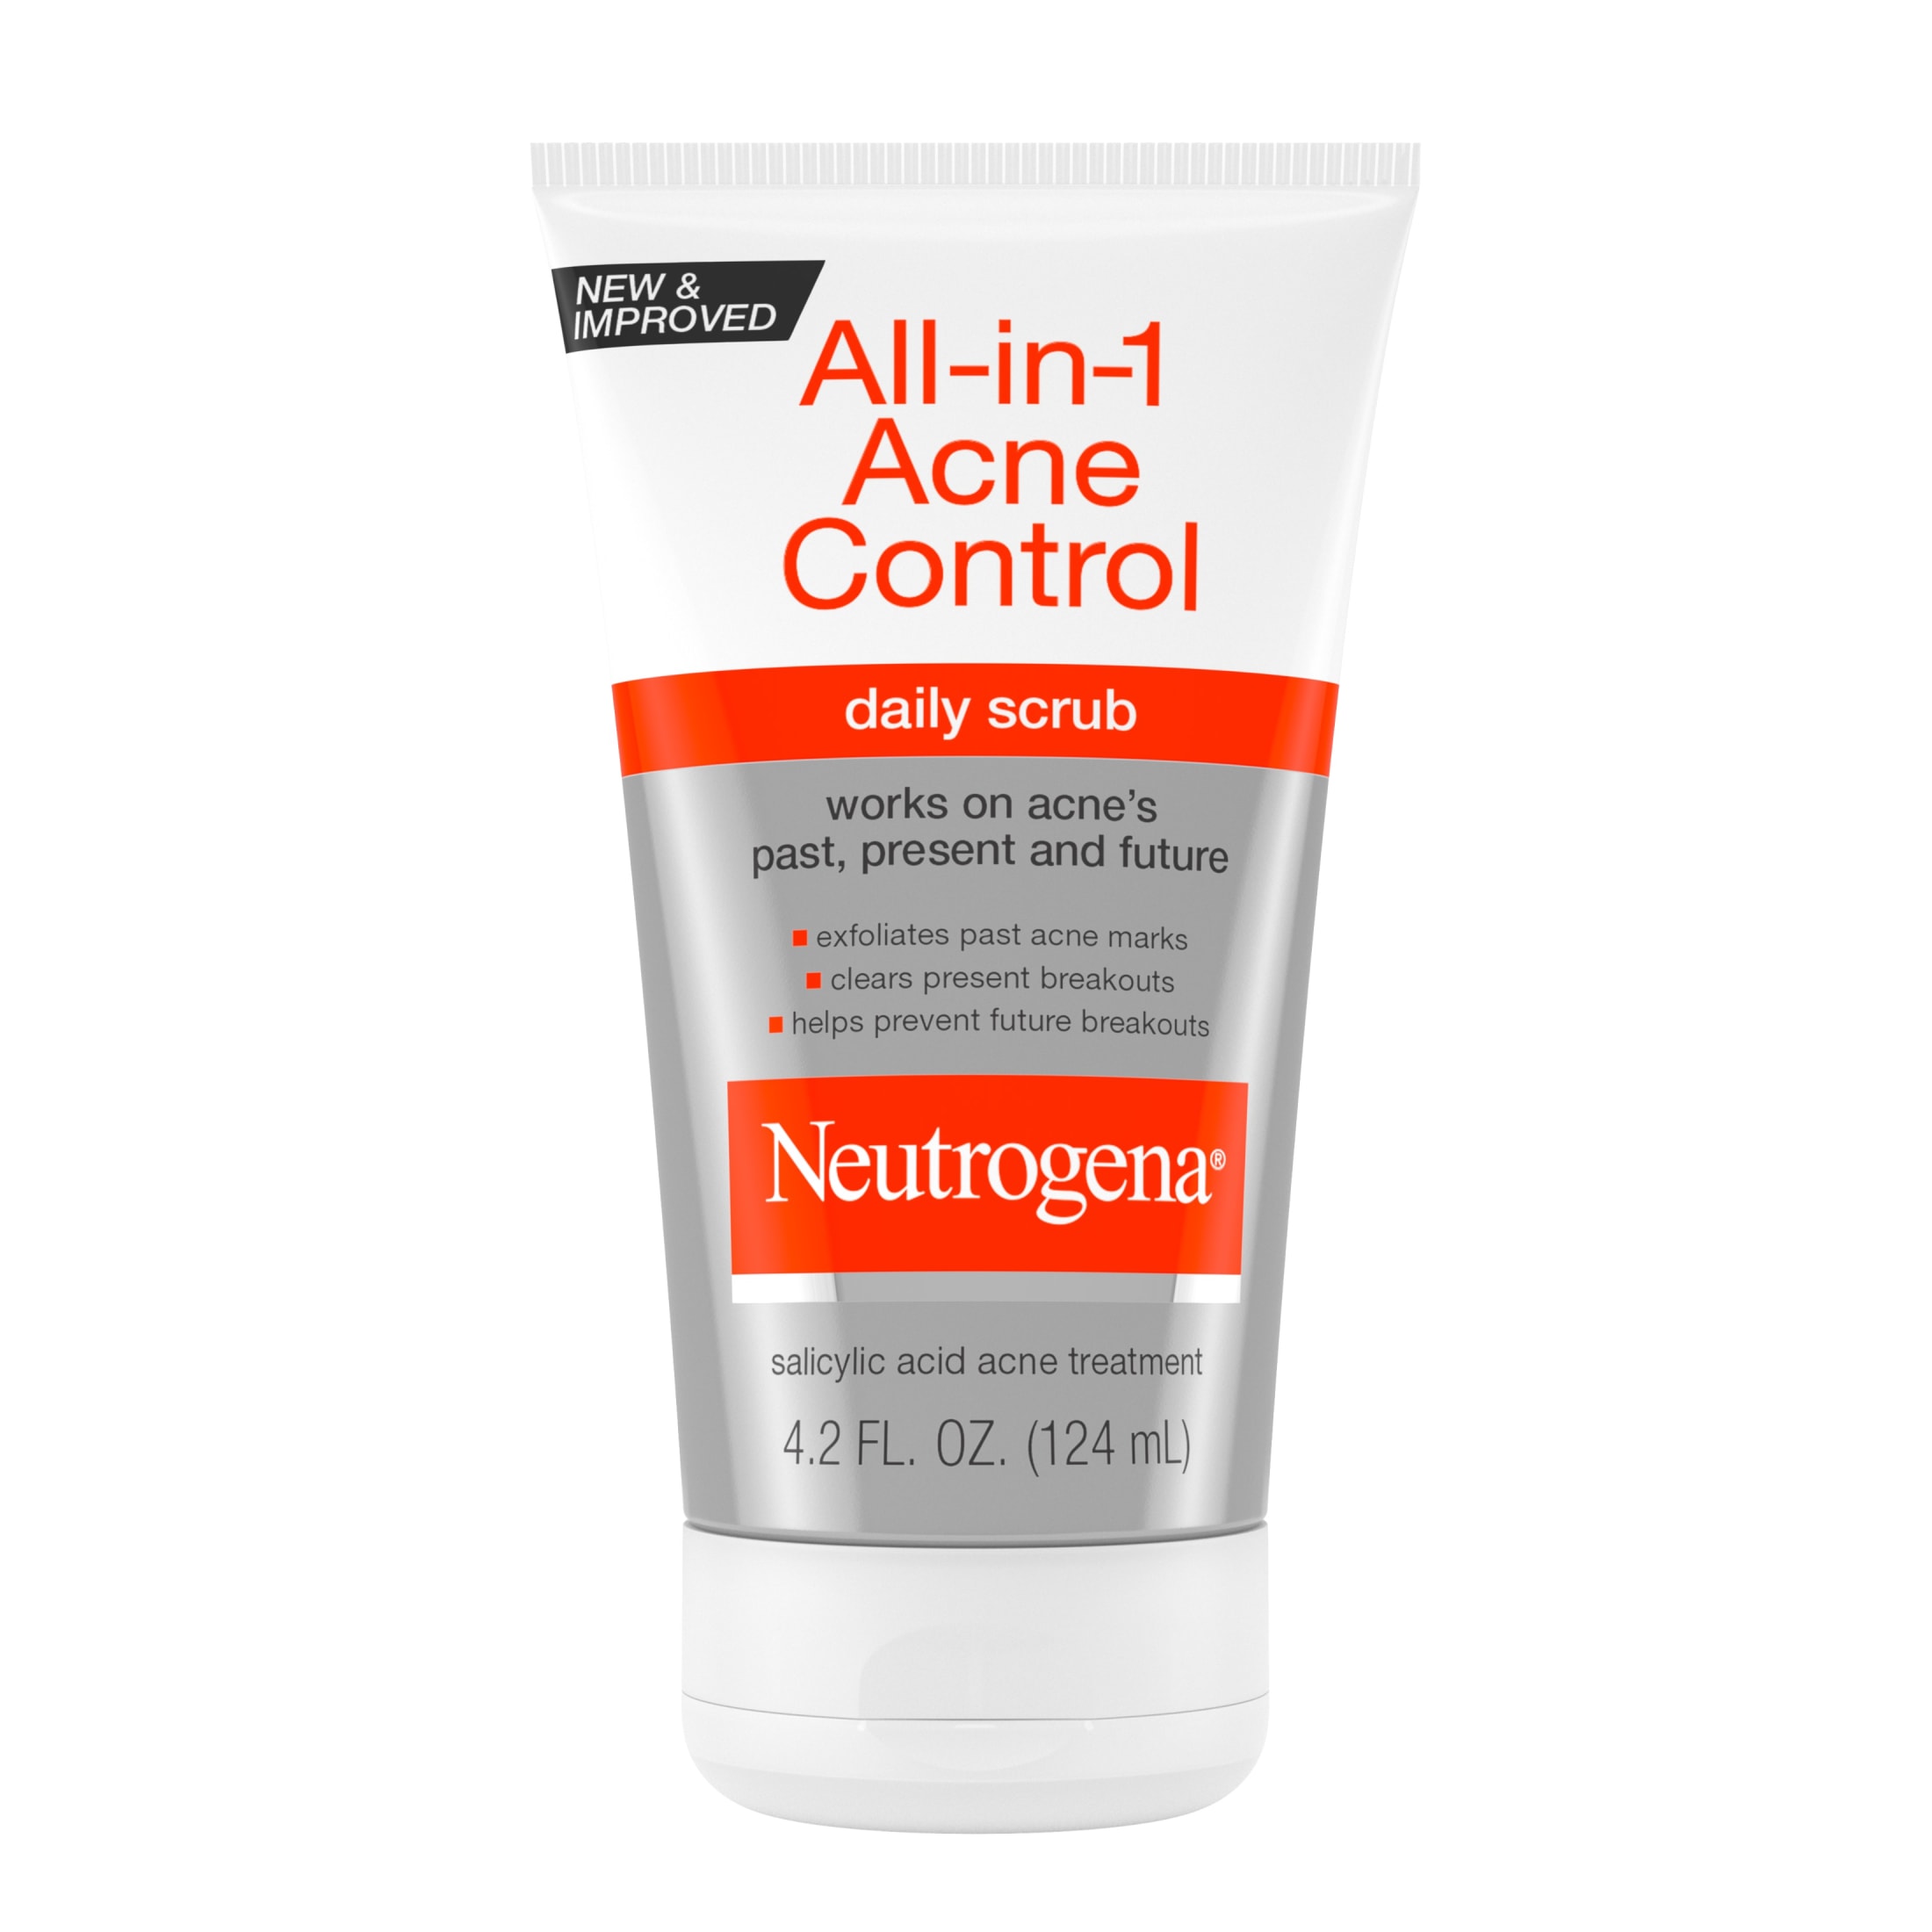 Neutrogena All-In-1 Acne Control Daily Facial Acne Scrub, 4.2 fl. oz - image 1 of 10